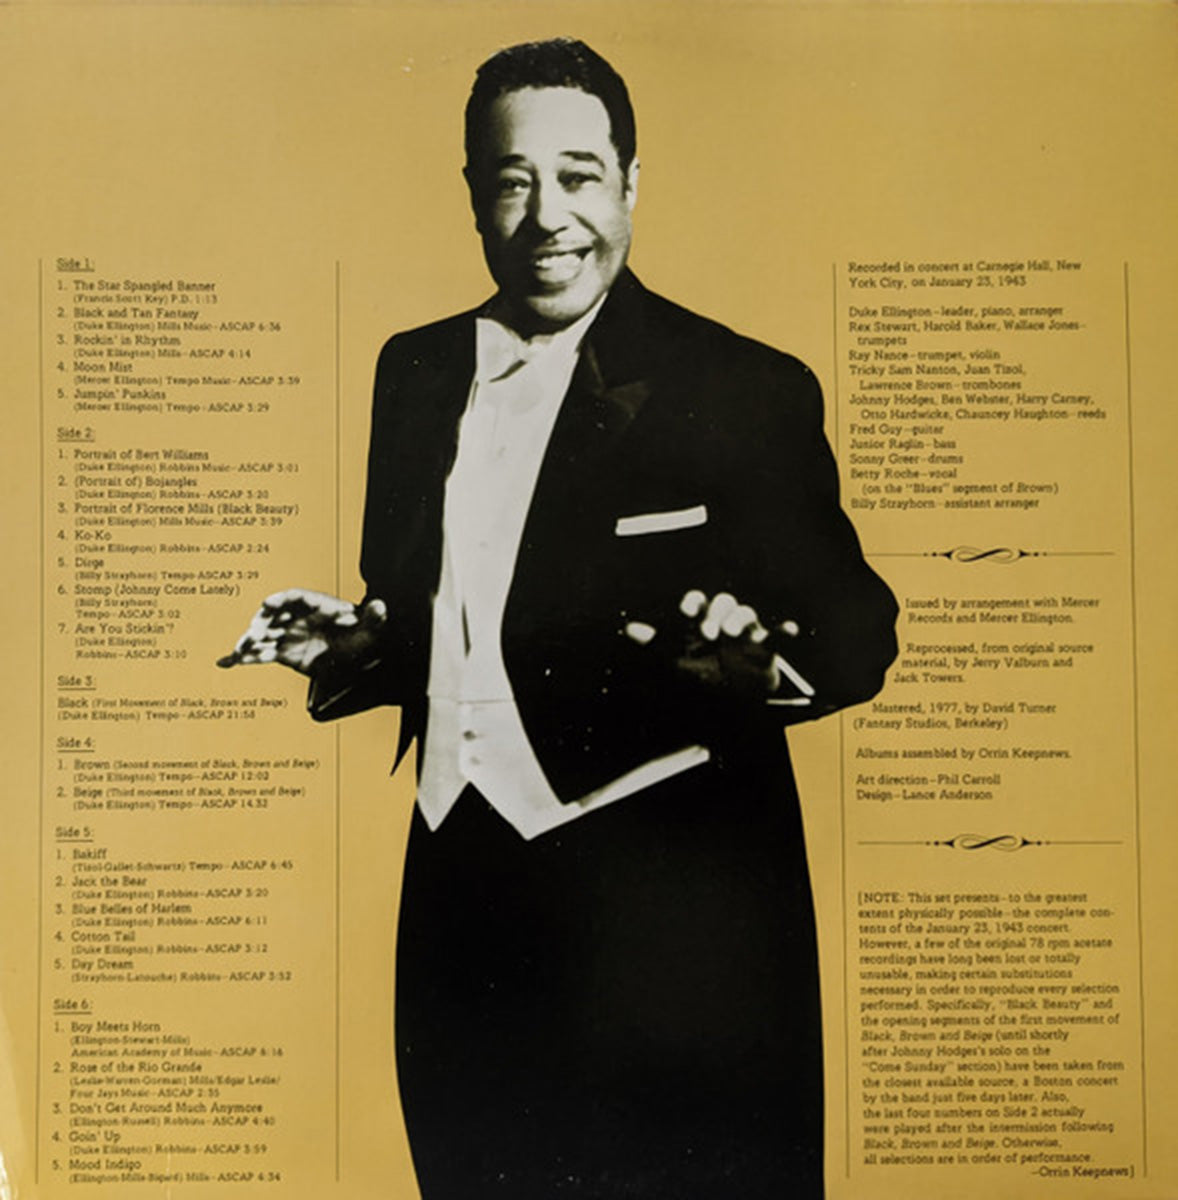 Duke Ellington And His Orchestra – January - 1977 US Pressing